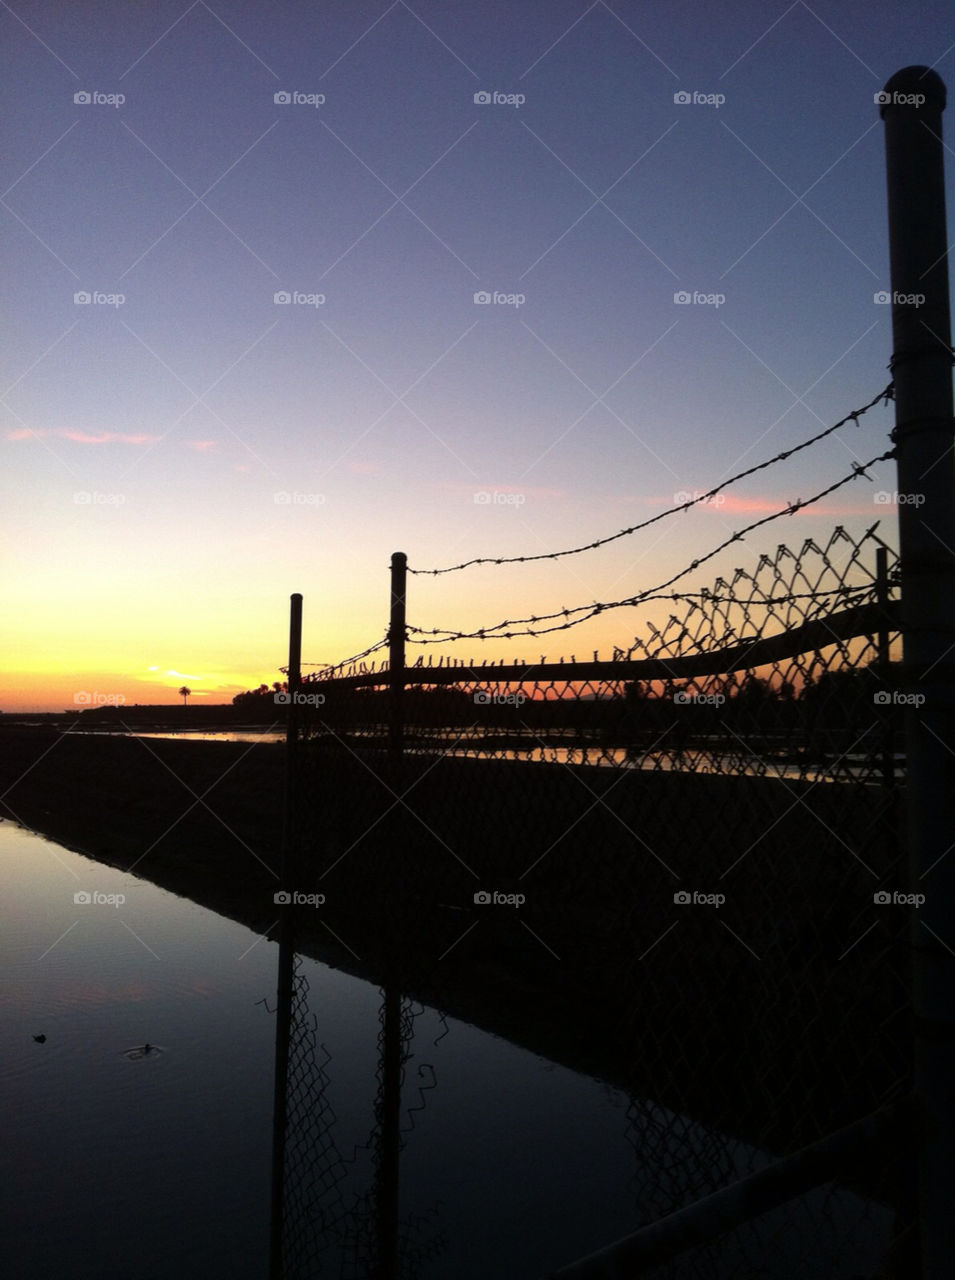 Barbwire fence over sunrise sunset